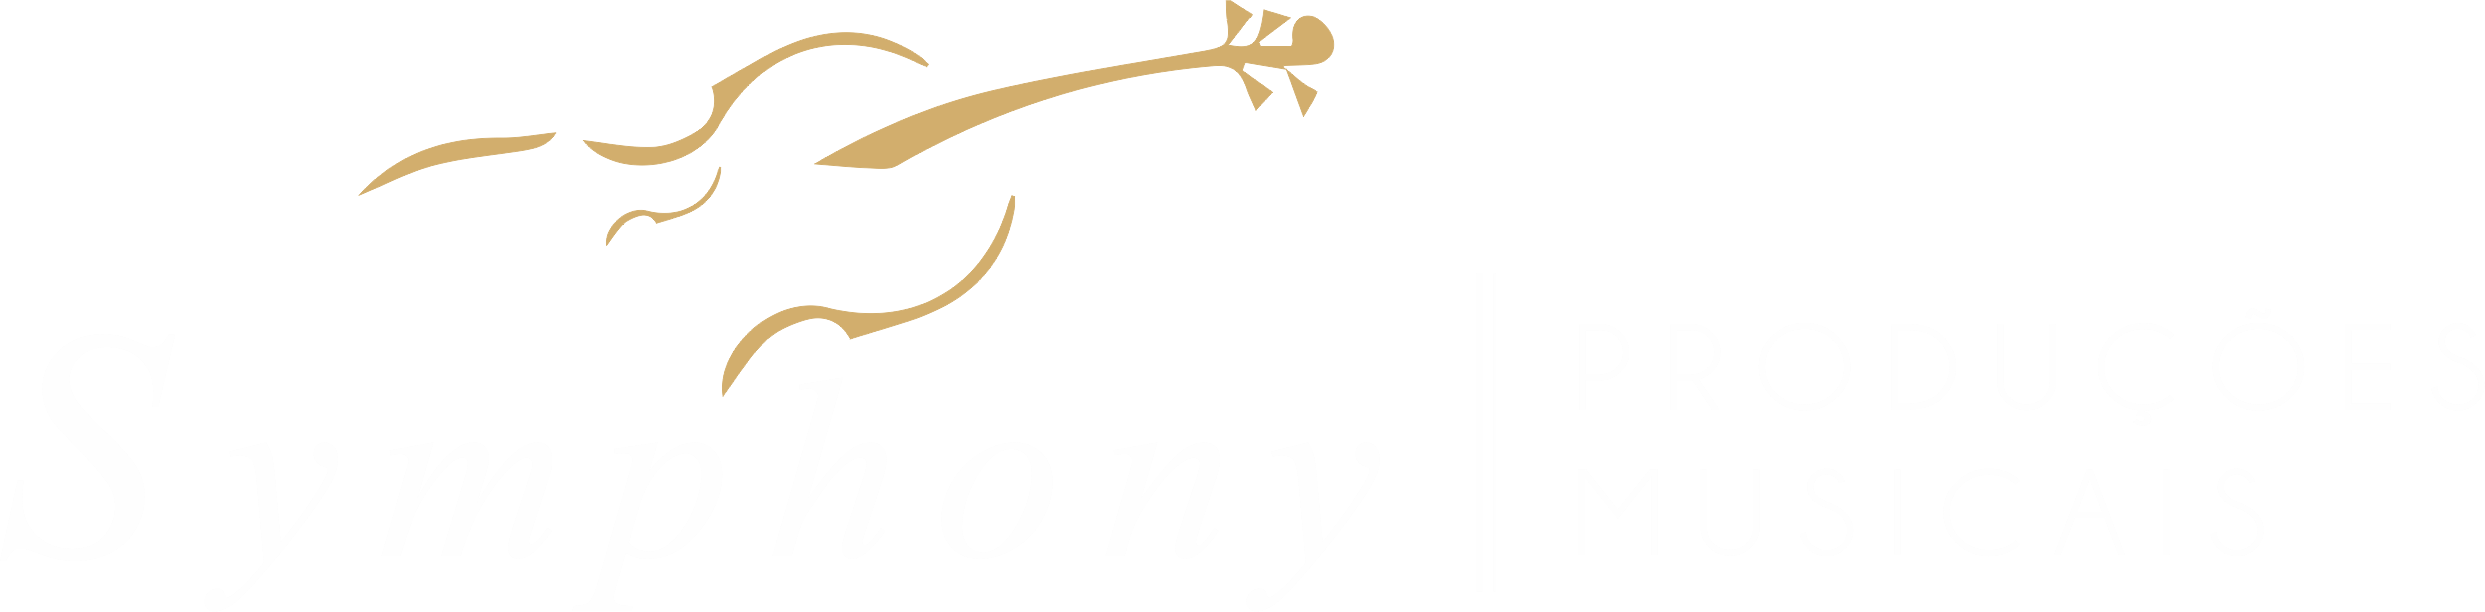 Synphony Logo